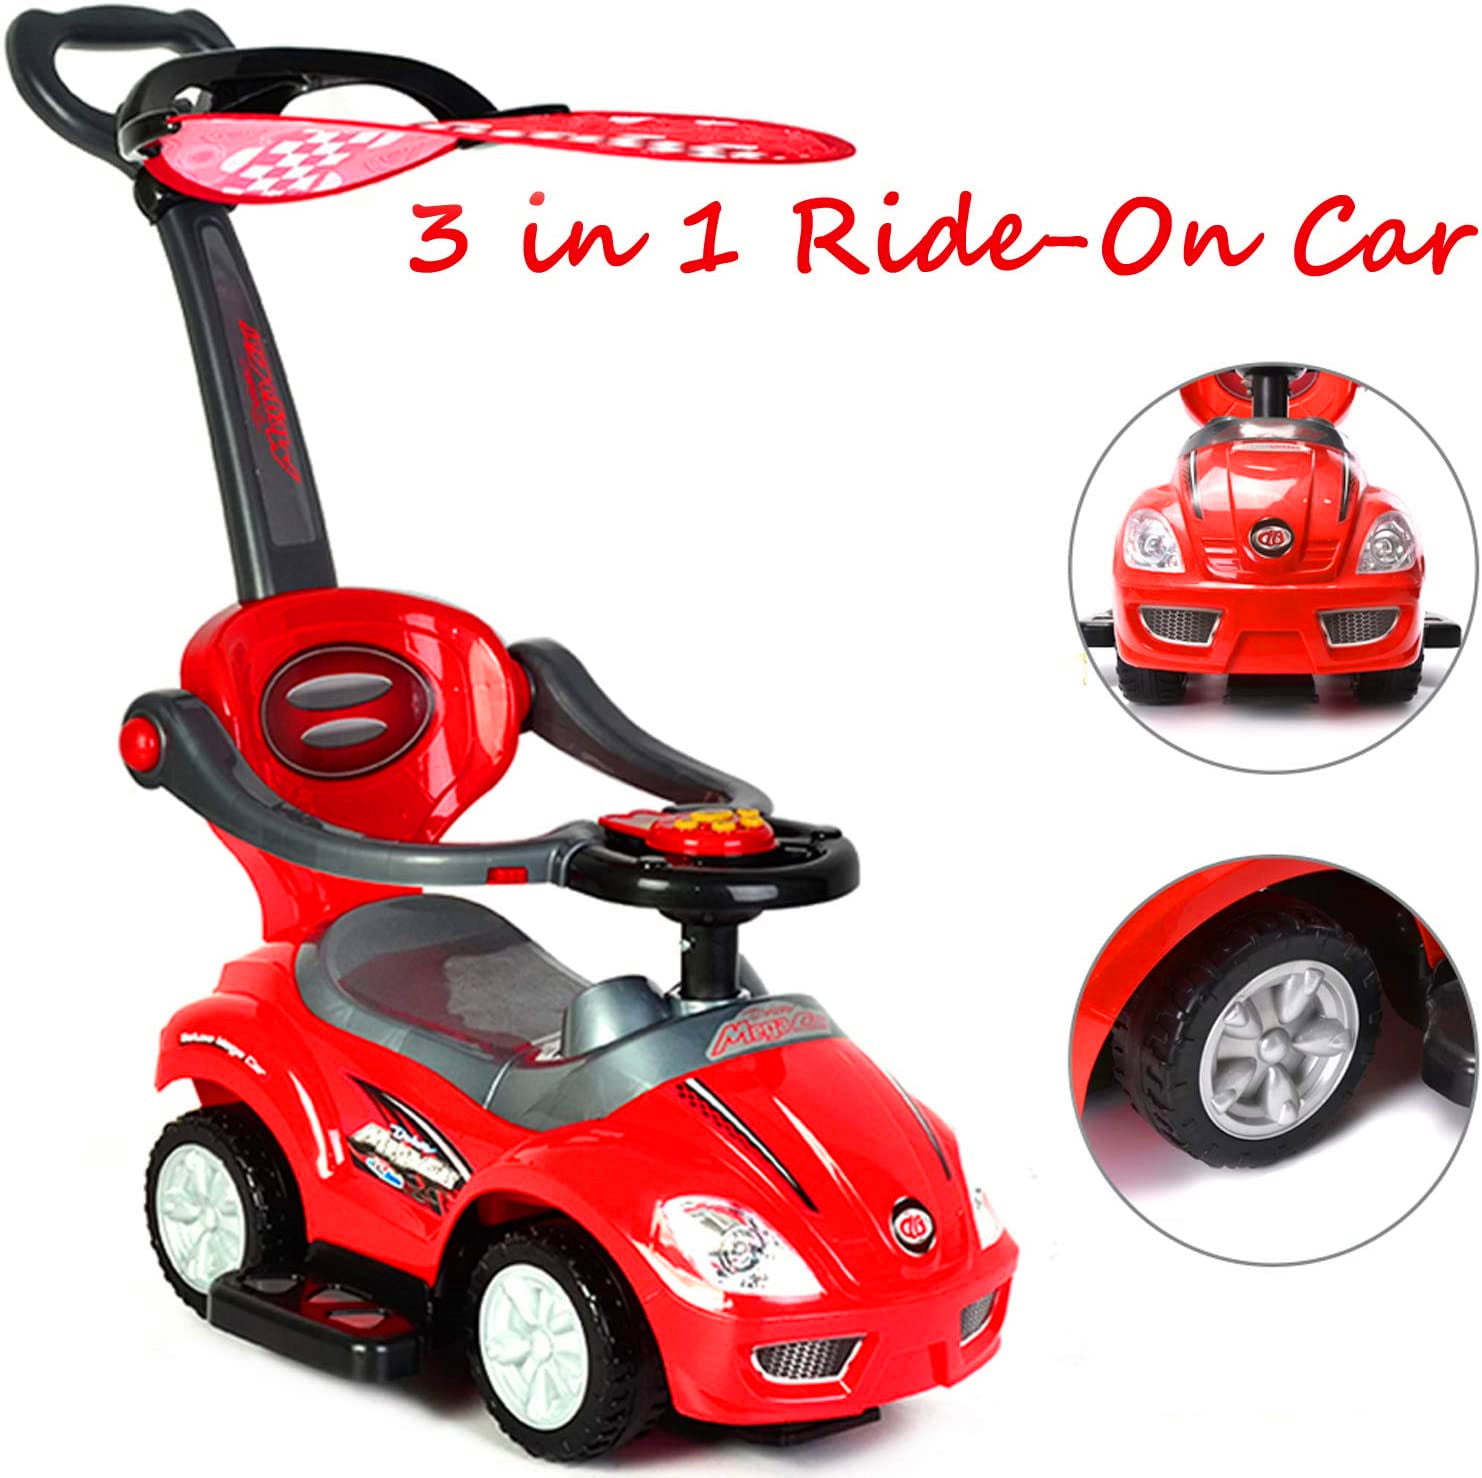 car stroller for baby